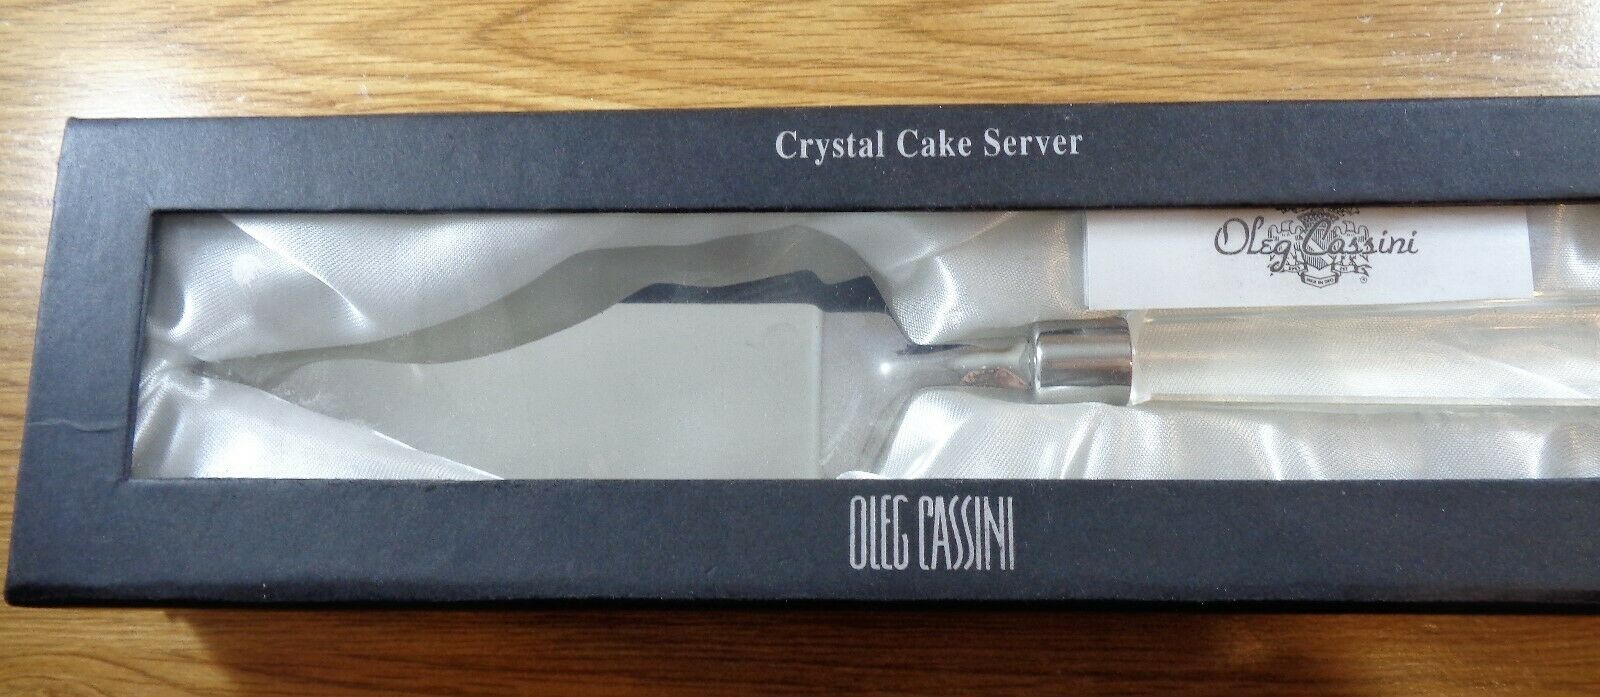 Oleg Cassini CRYSTAL CAKE SERVER